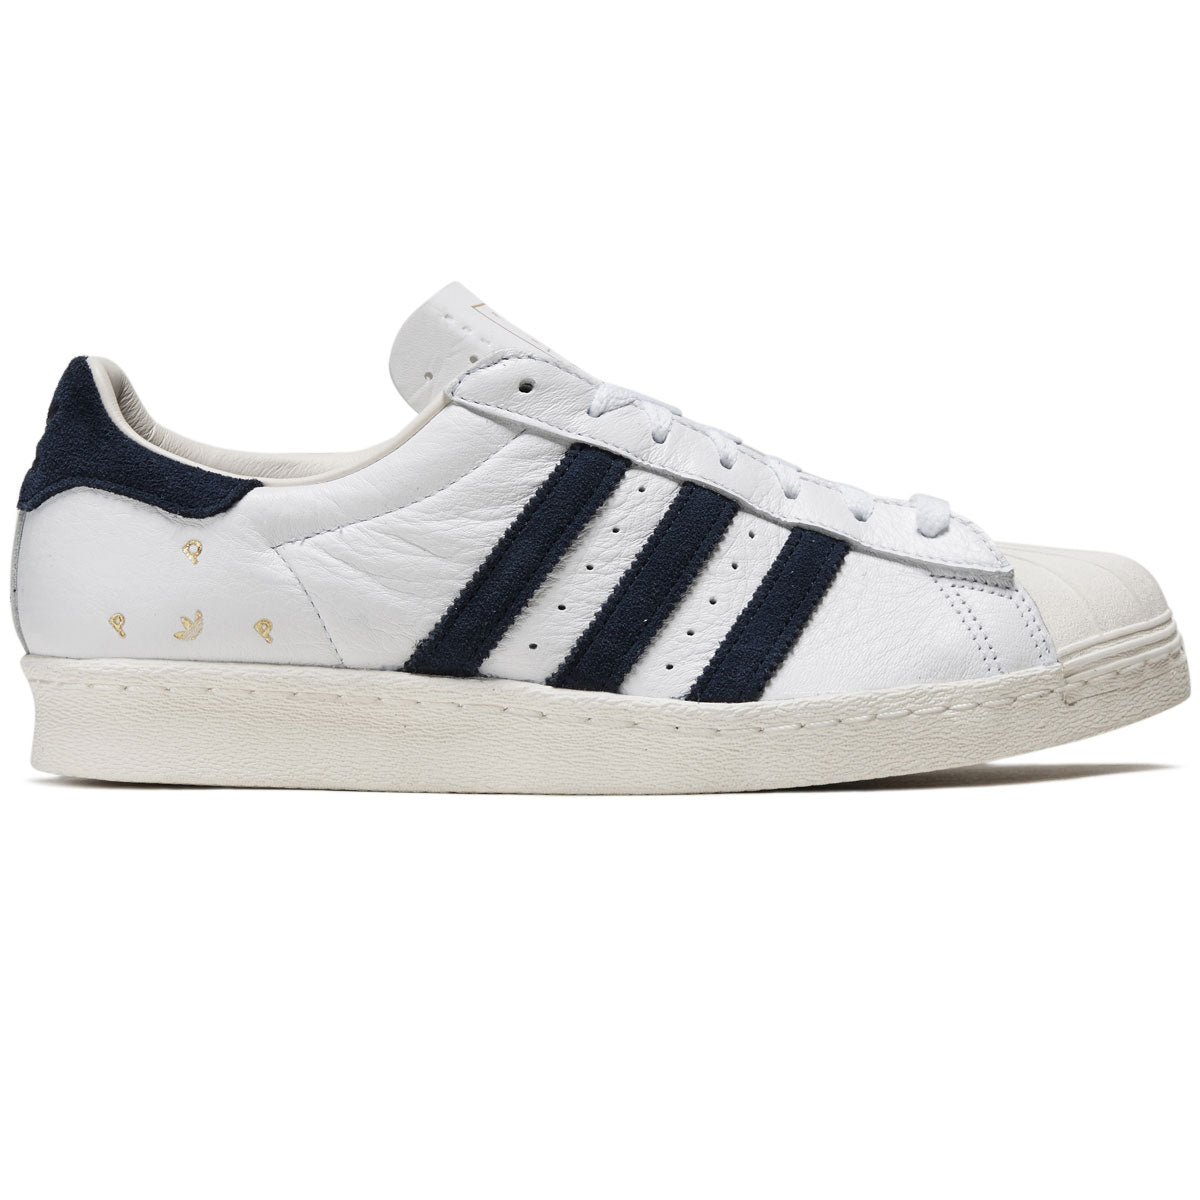 Adidas x Pop Trading Co Superstar Adv Shoes - White/Collegiate Navy/Chalk White image 1